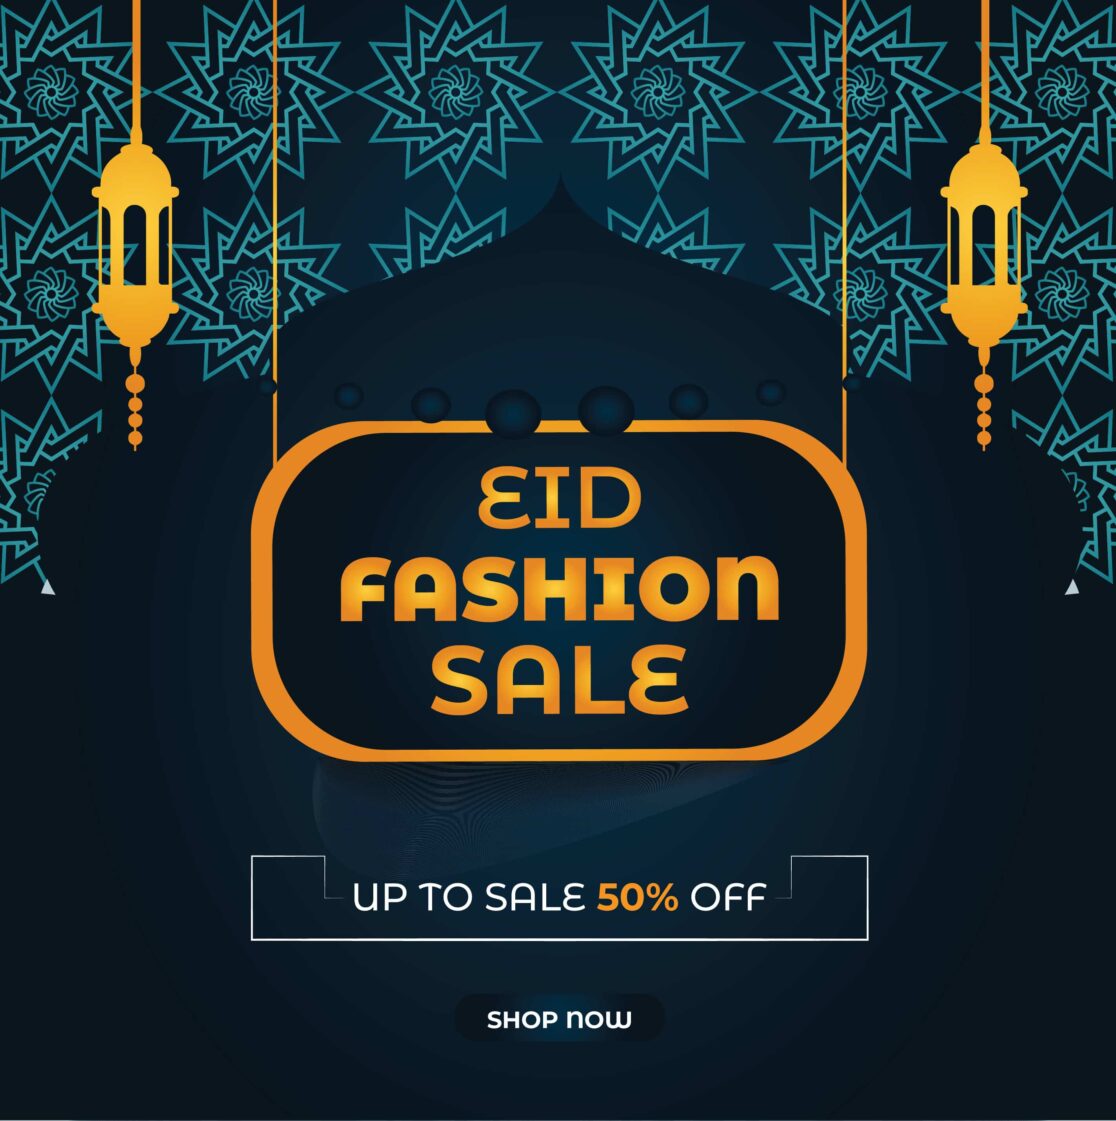 Eid fashion sale coupon